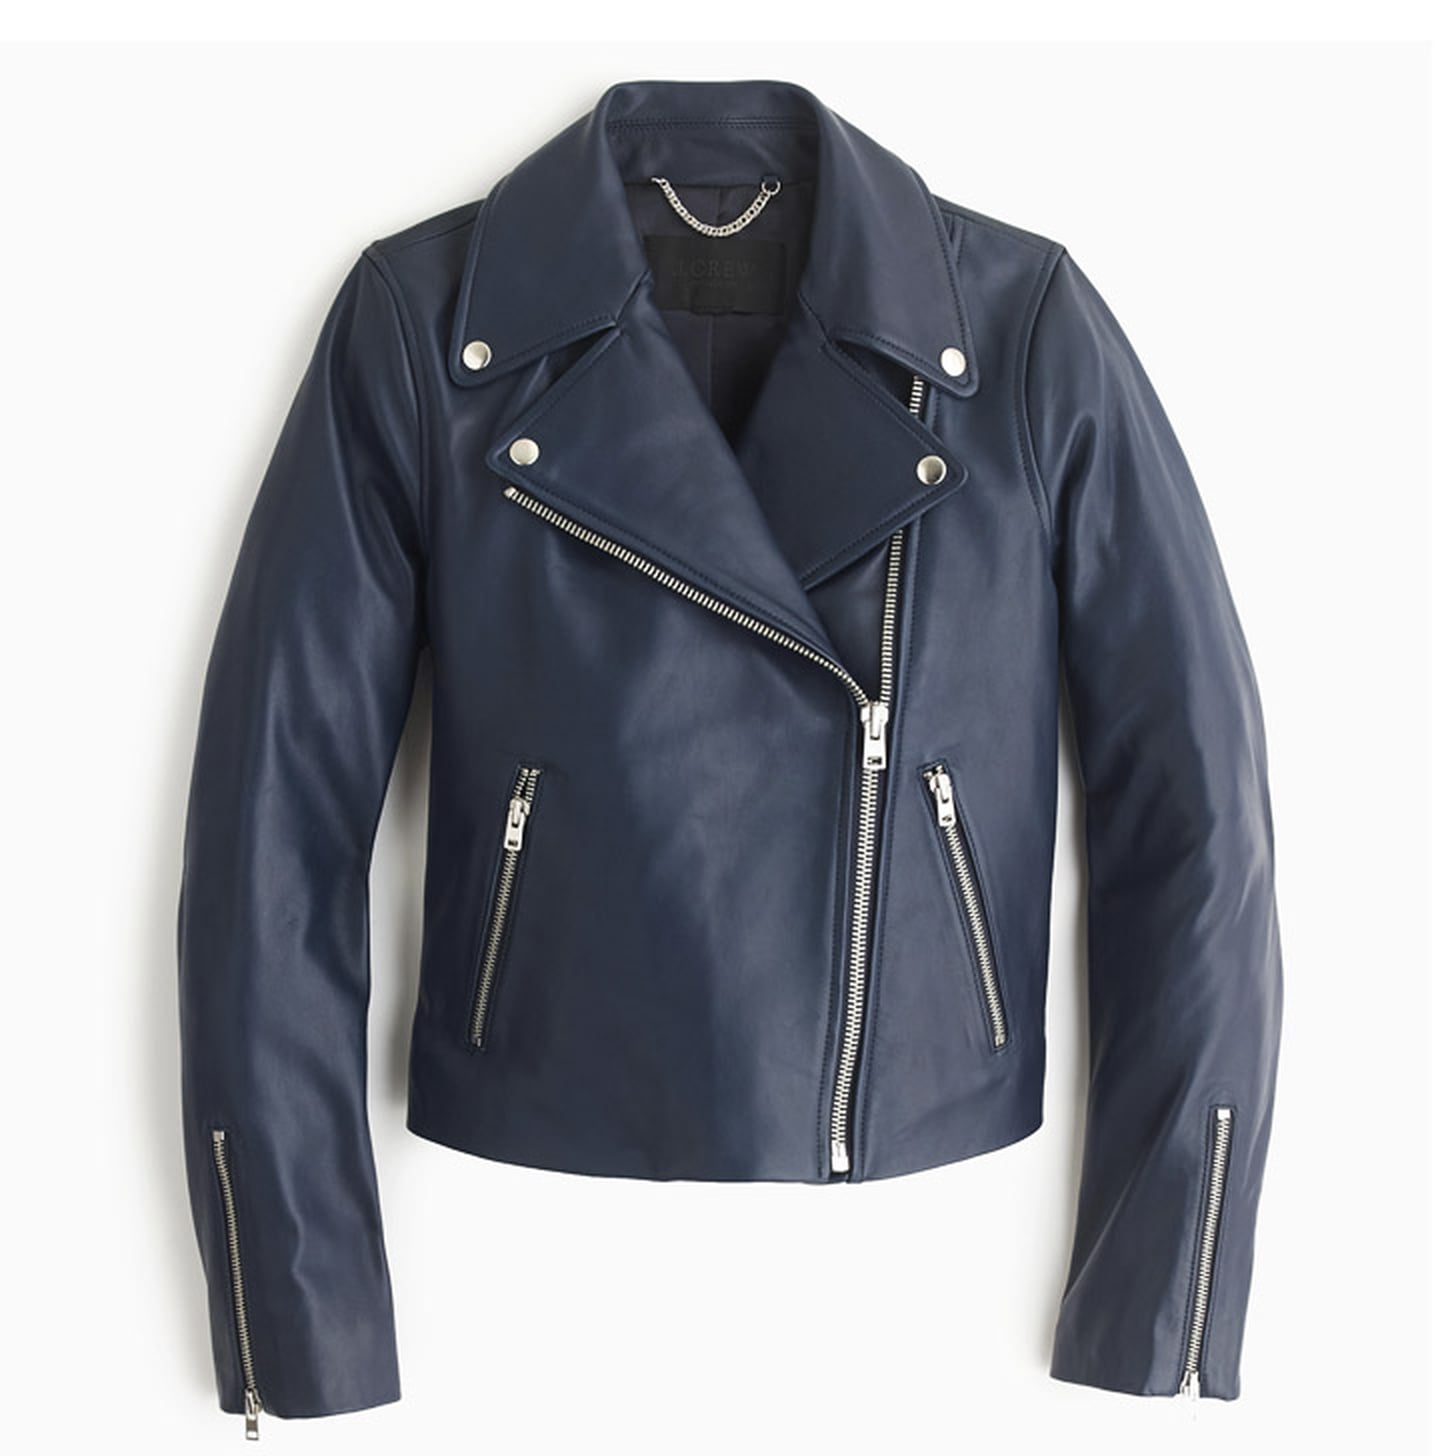 Jackets Every Woman Needs | POPSUGAR Fashion